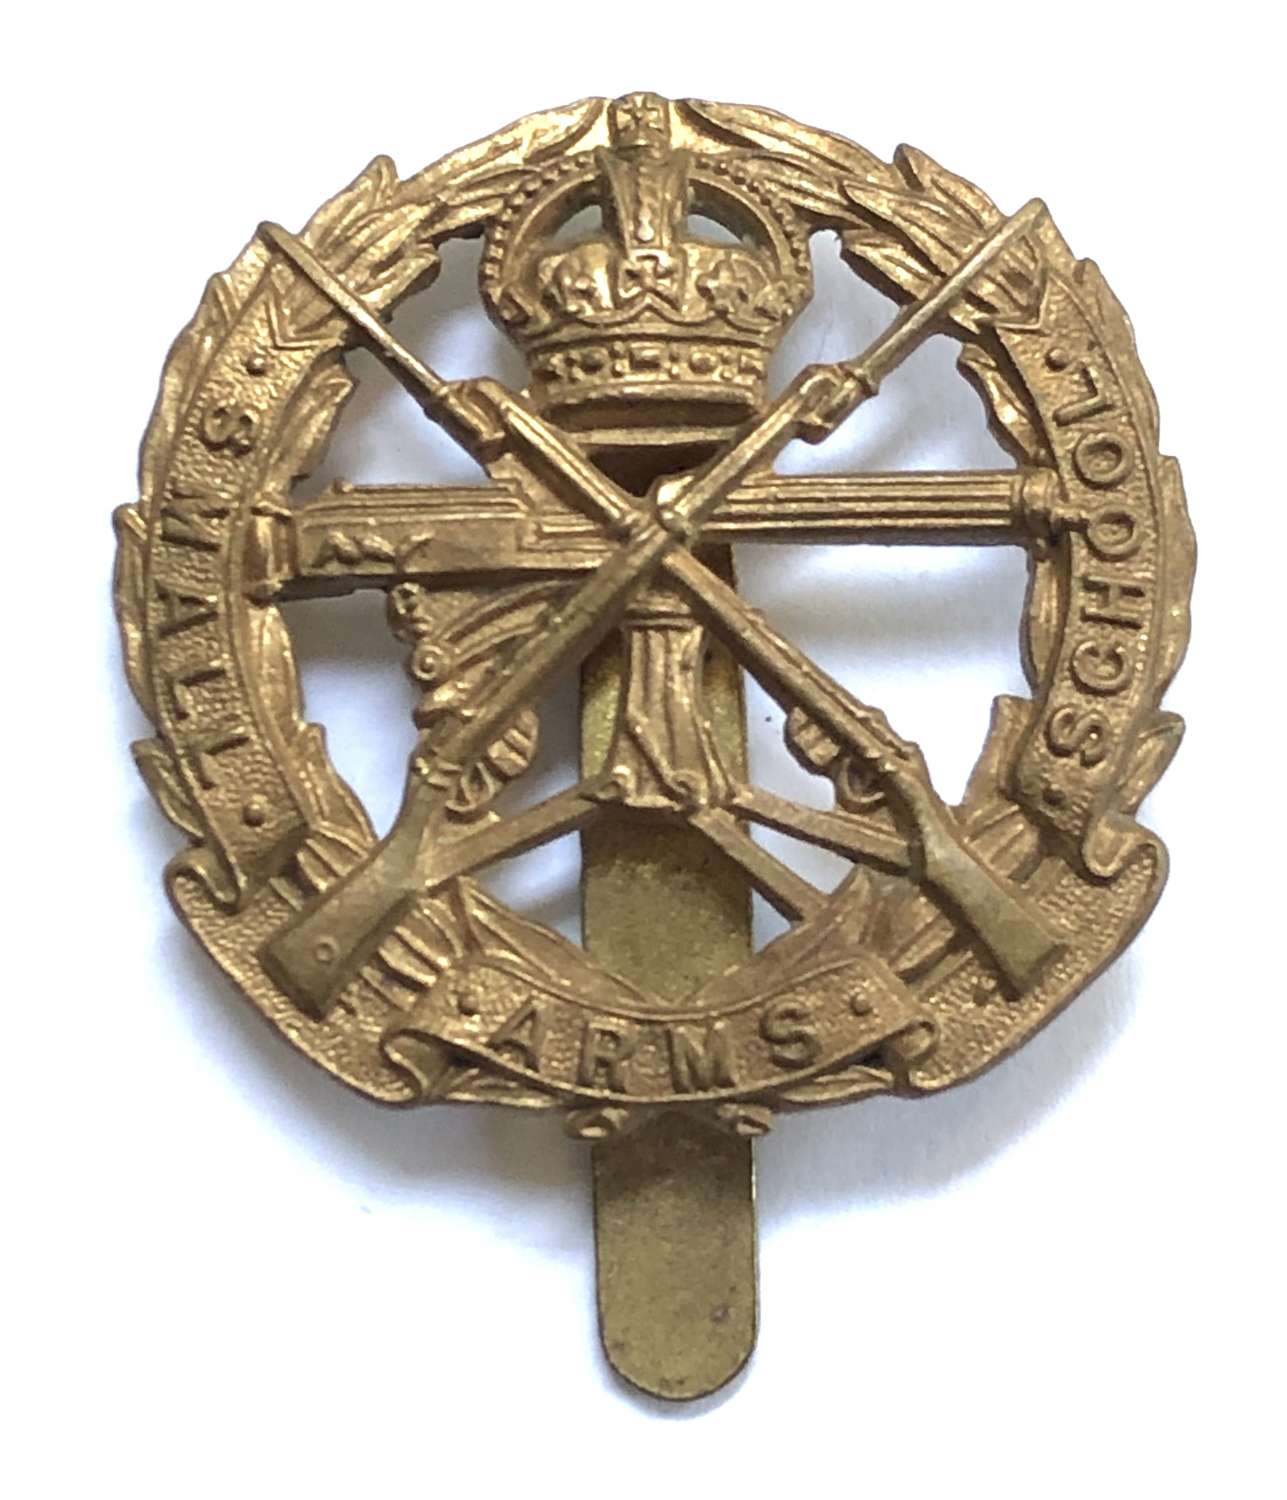 Small Arms School cap badge circa 1926-52 by Firmin, London